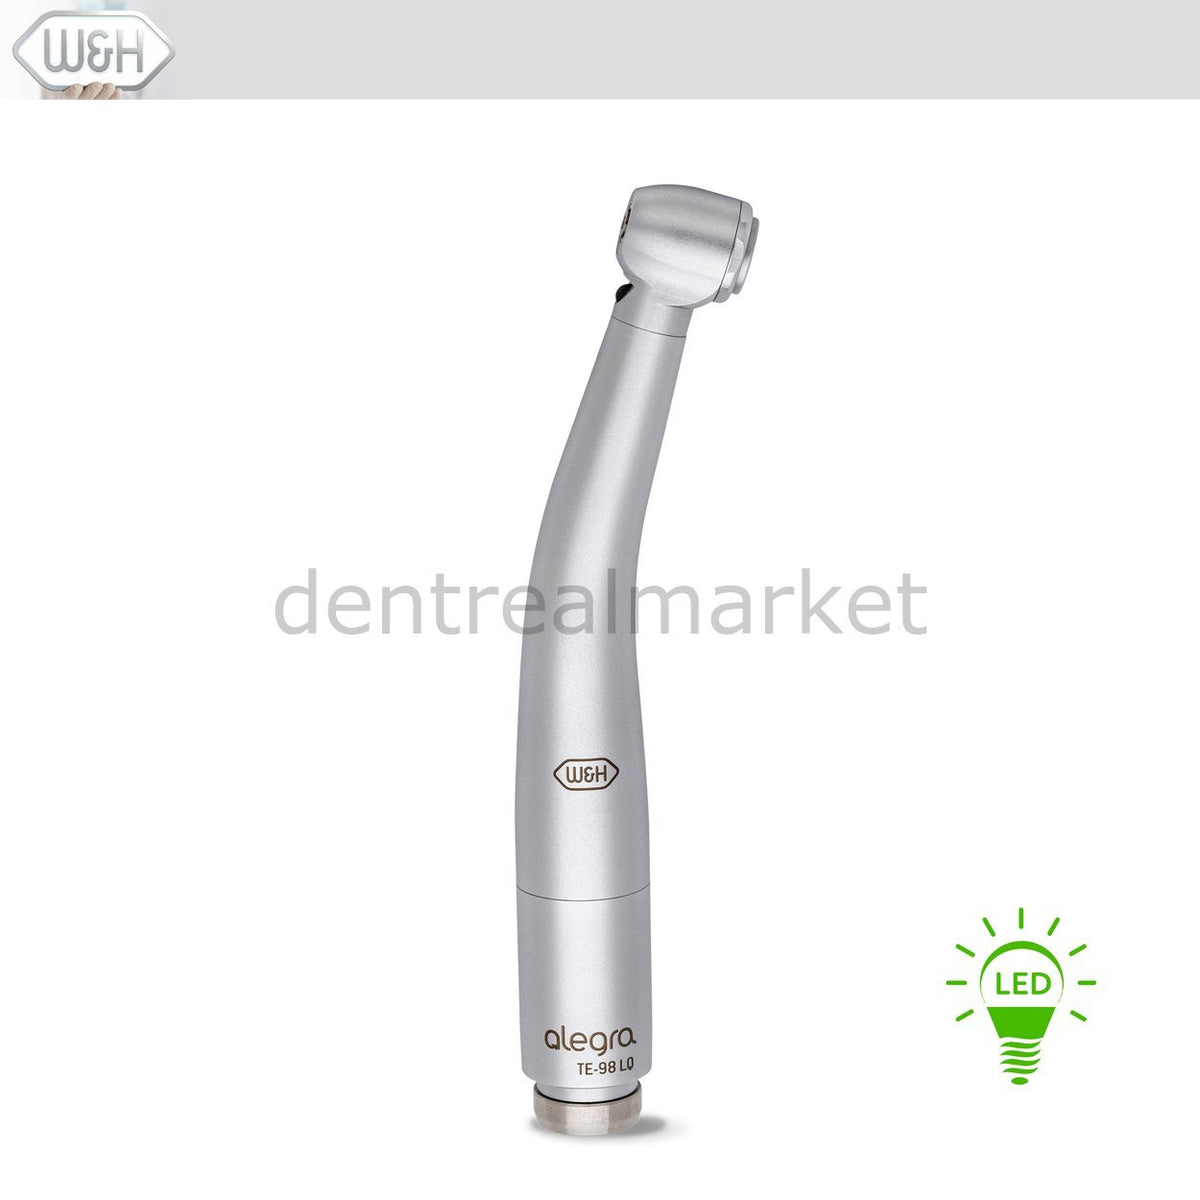 DentrealStore - W&H Dental Alegra Turbine Led Light Aerator - TE-98LQ